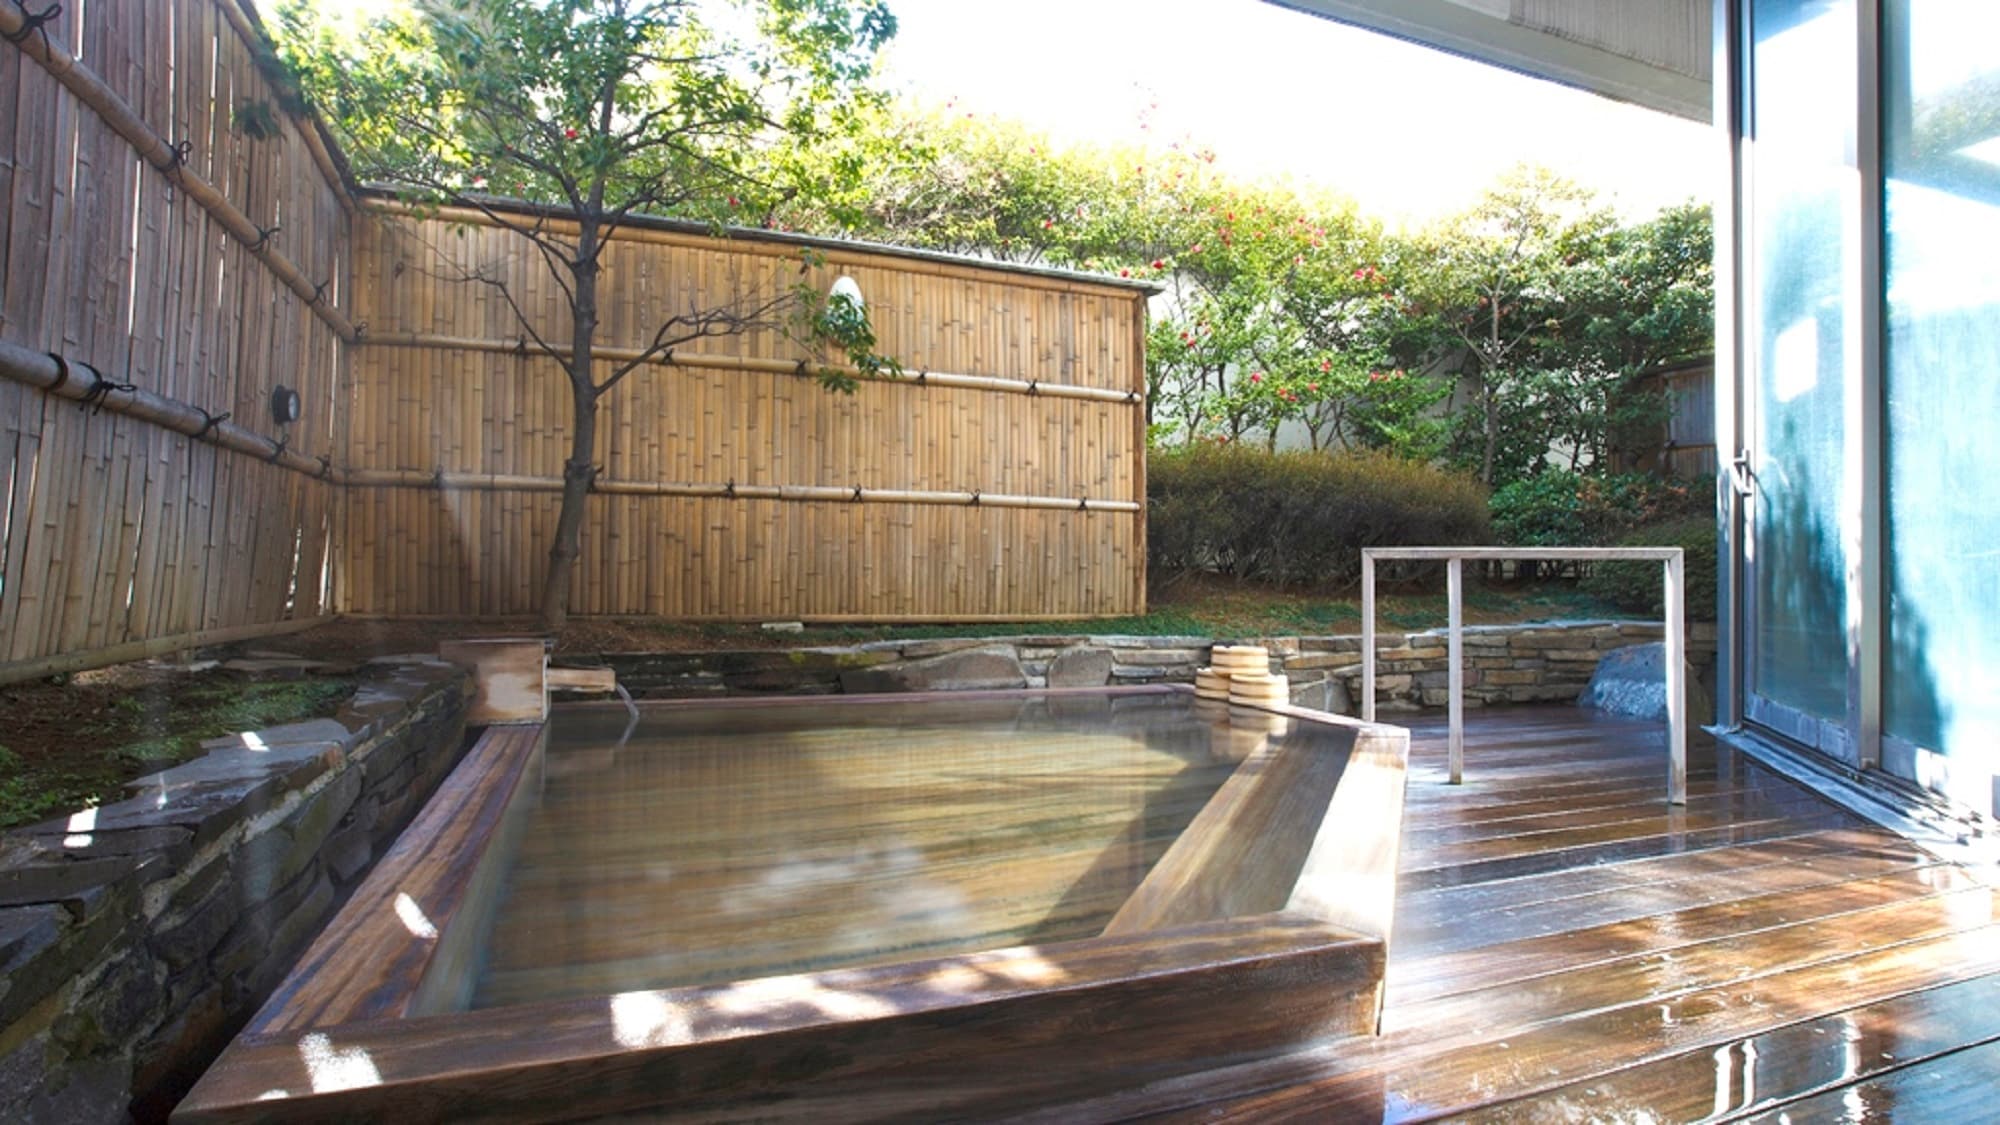 An open-air bath with bright sunlight